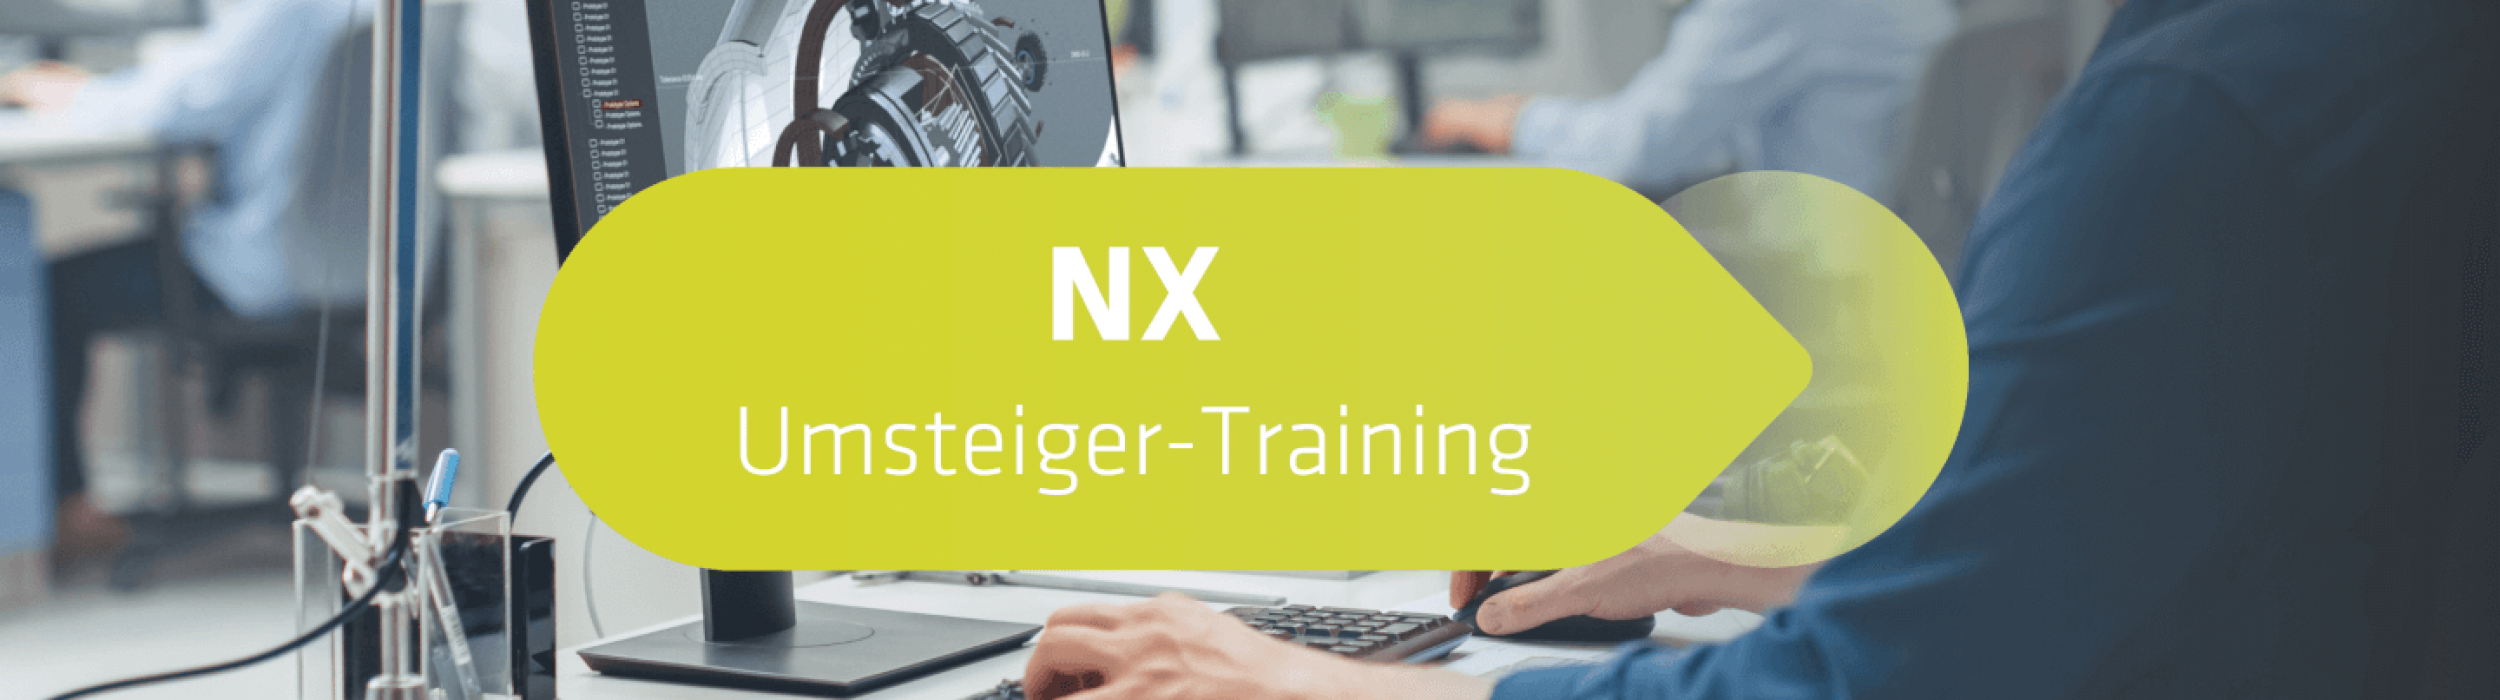 NX Umsteiger Training